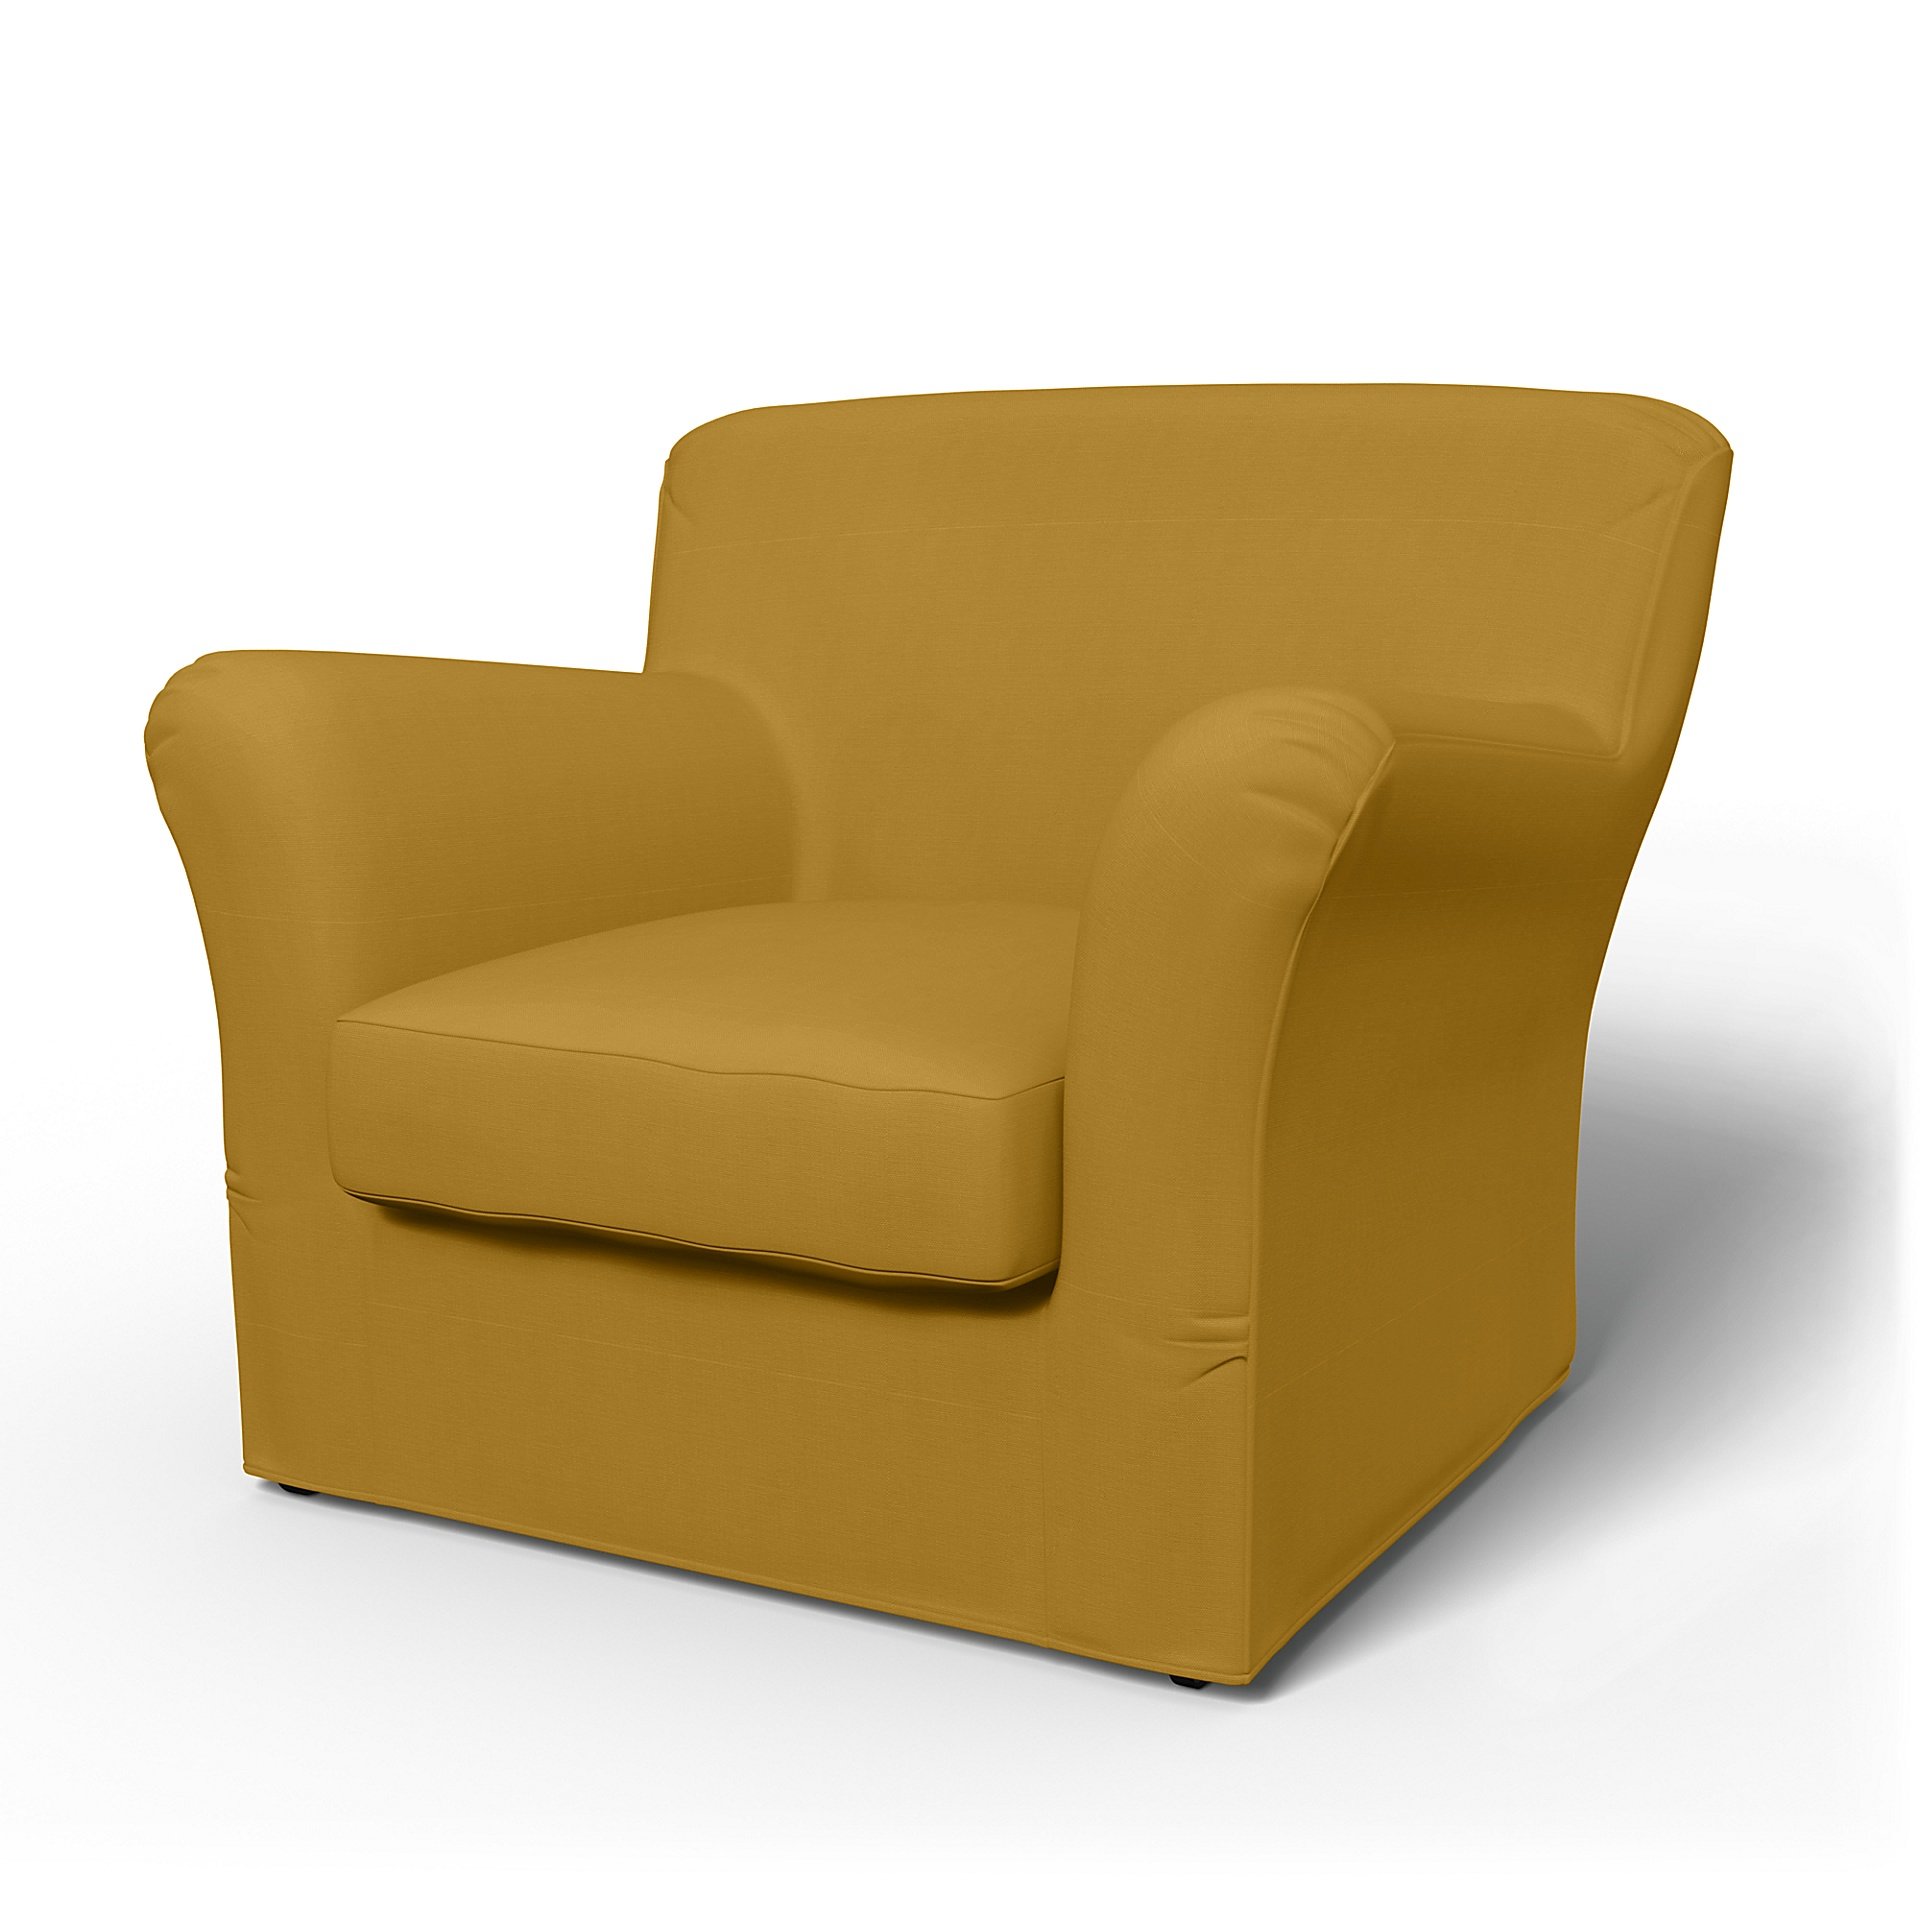 IKEA - Tomelilla Low Back Armchair Cover (Standard model), Honey Mustard, Cotton - Bemz